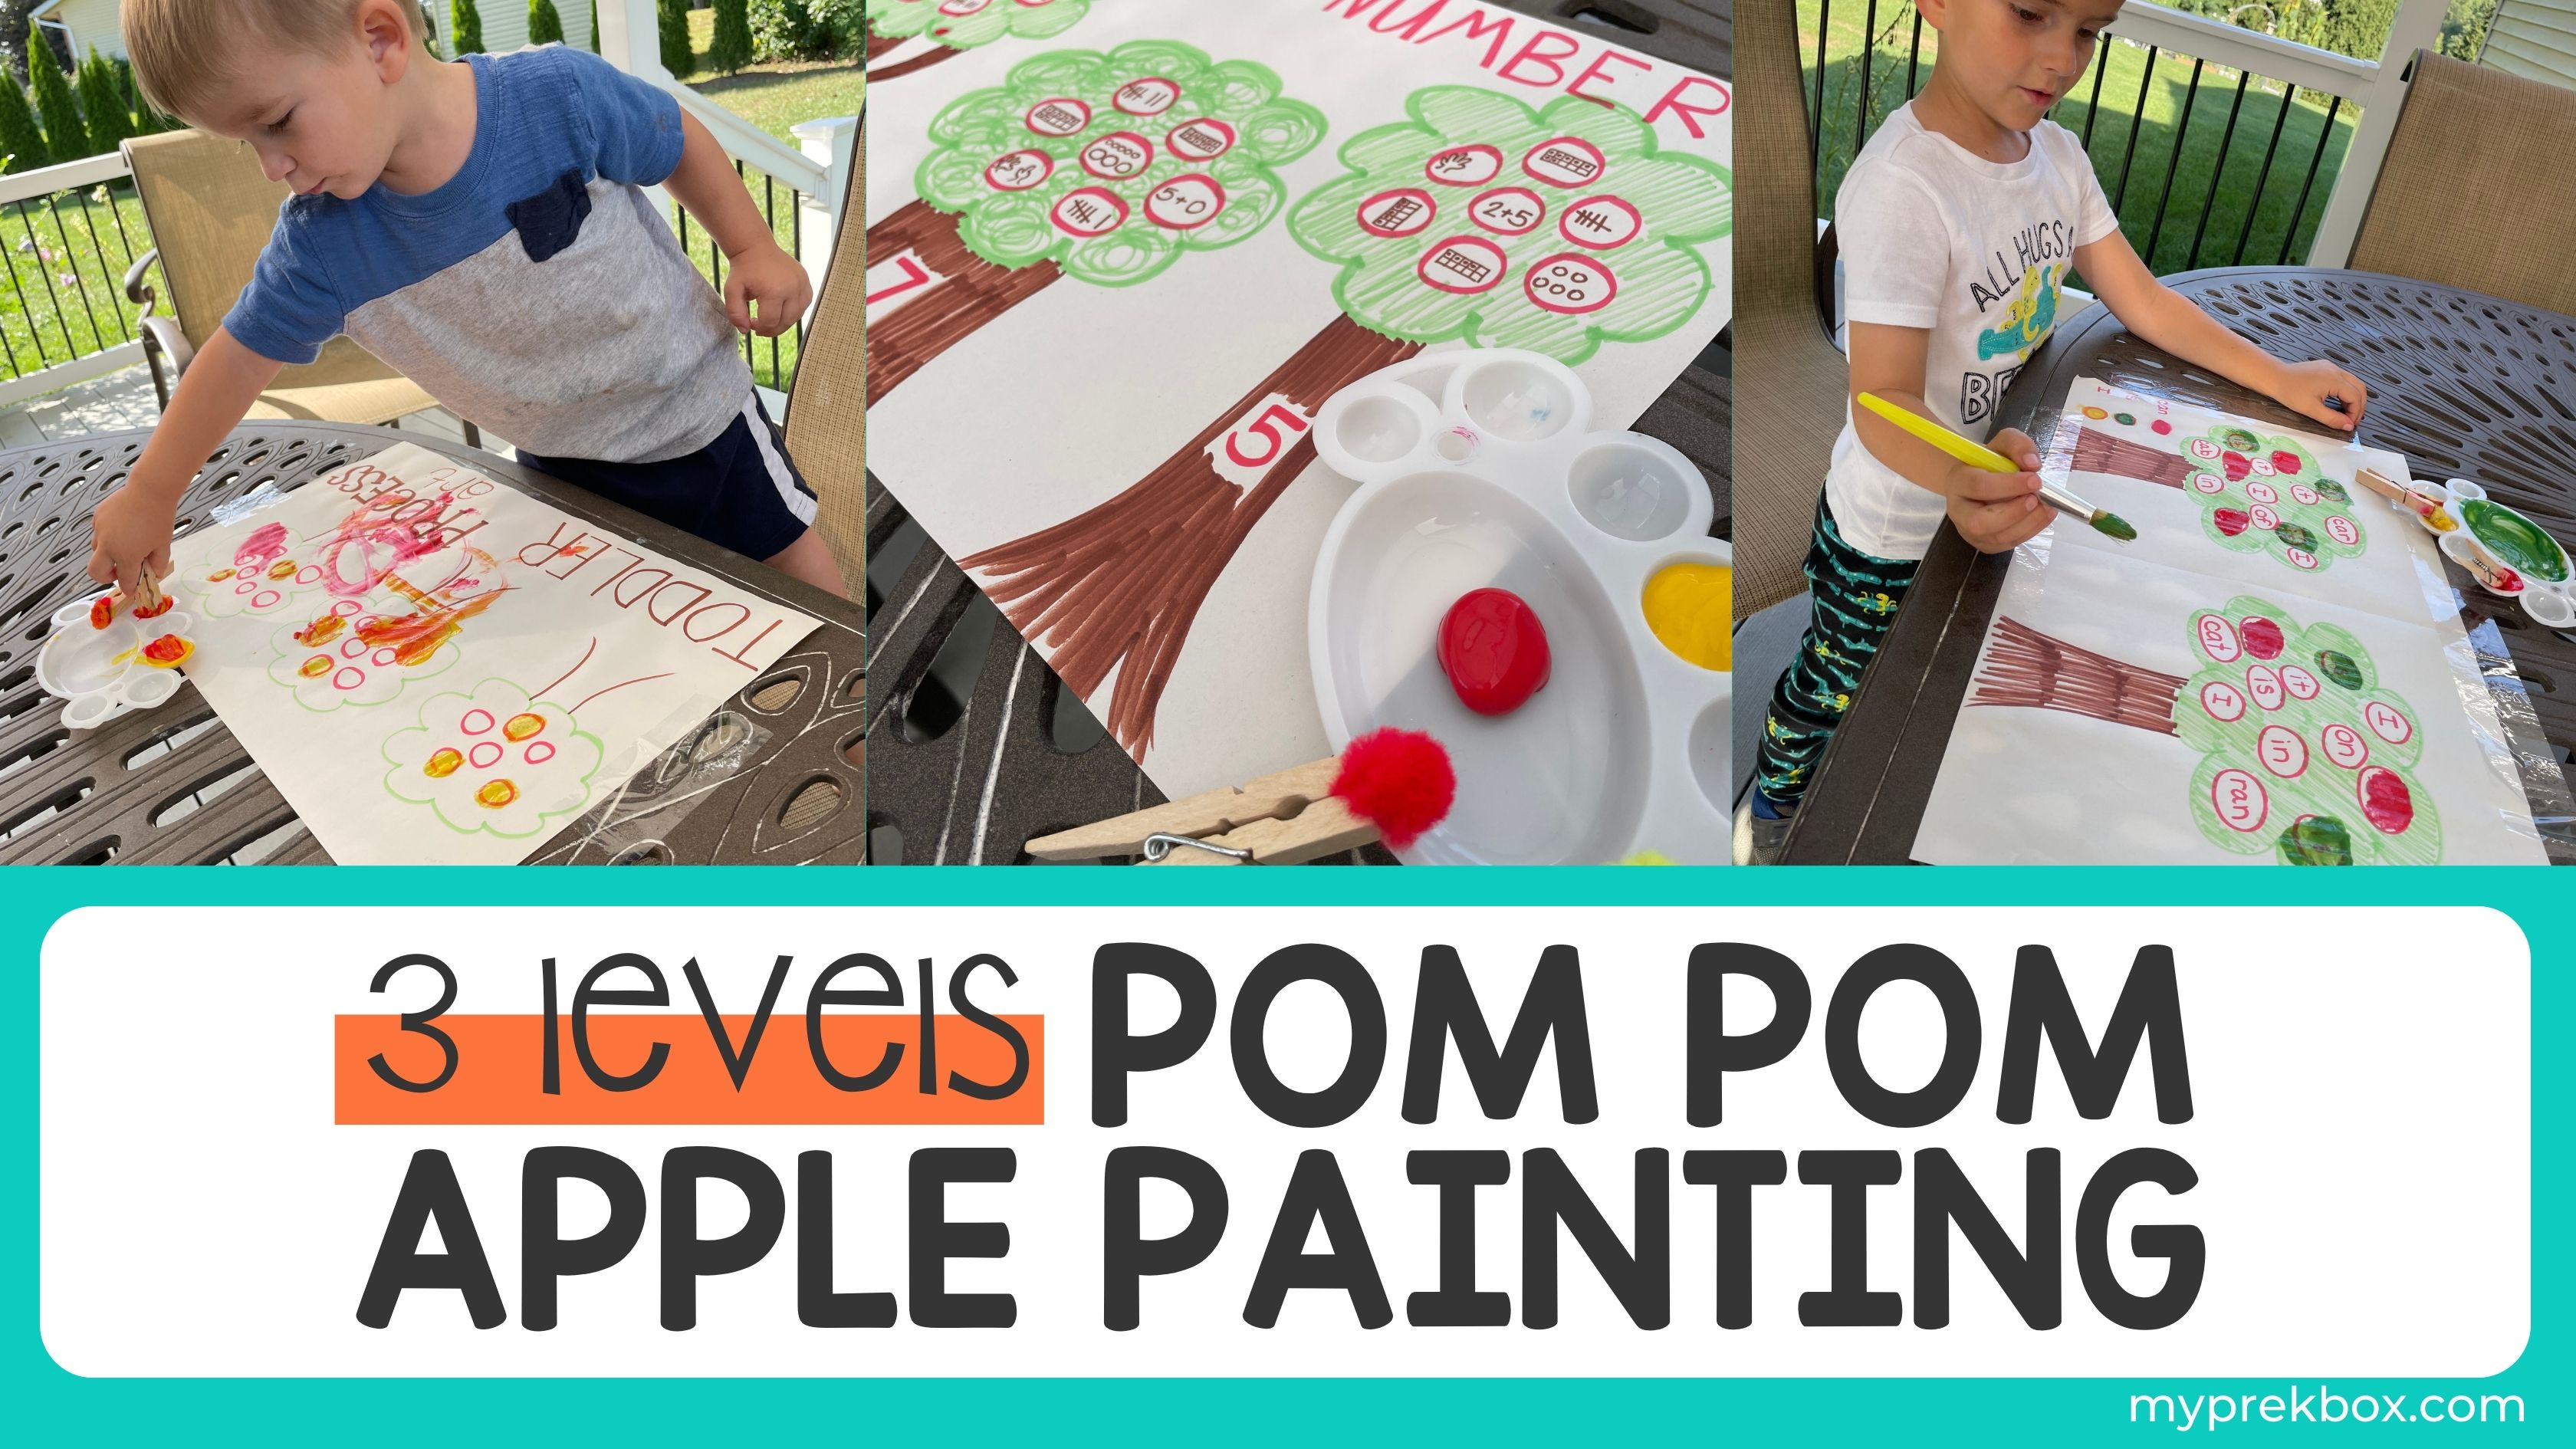 Pom Pom Apple Painting